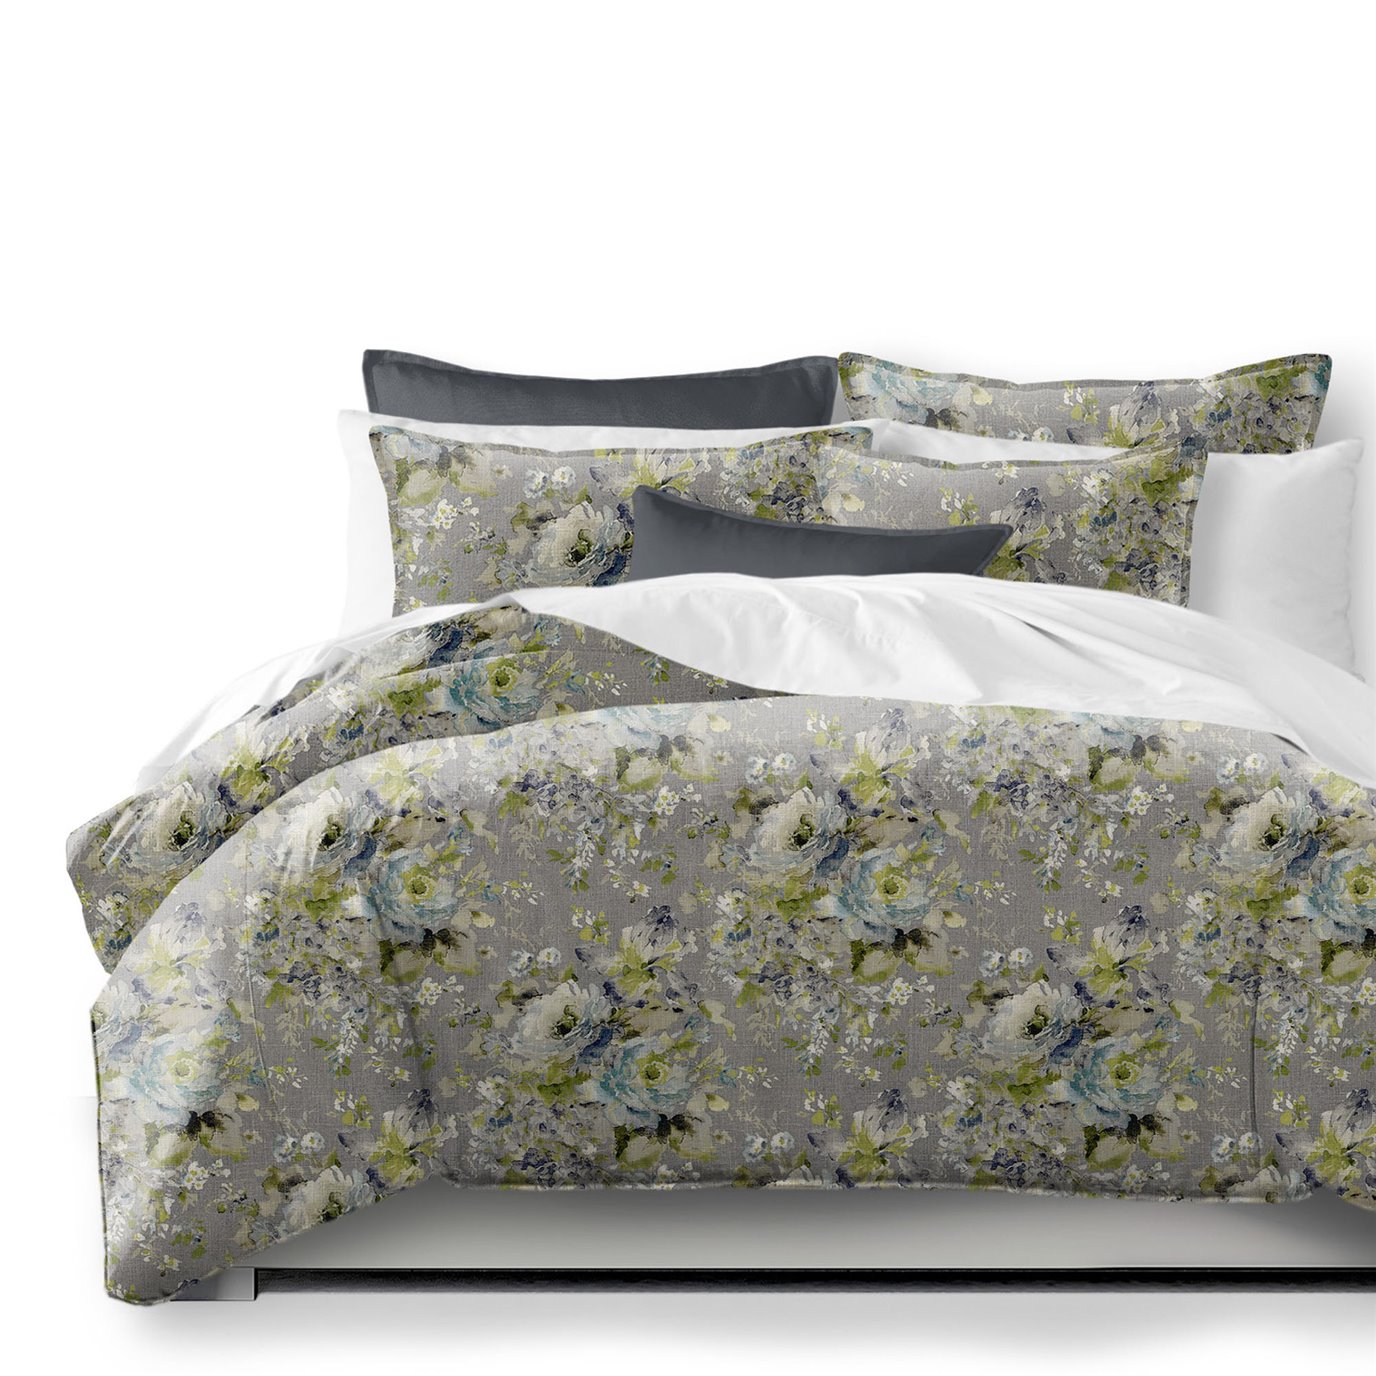 Athena Linen Heather Gray Comforter and Pillow Sham(s) Set - Size Super Queen